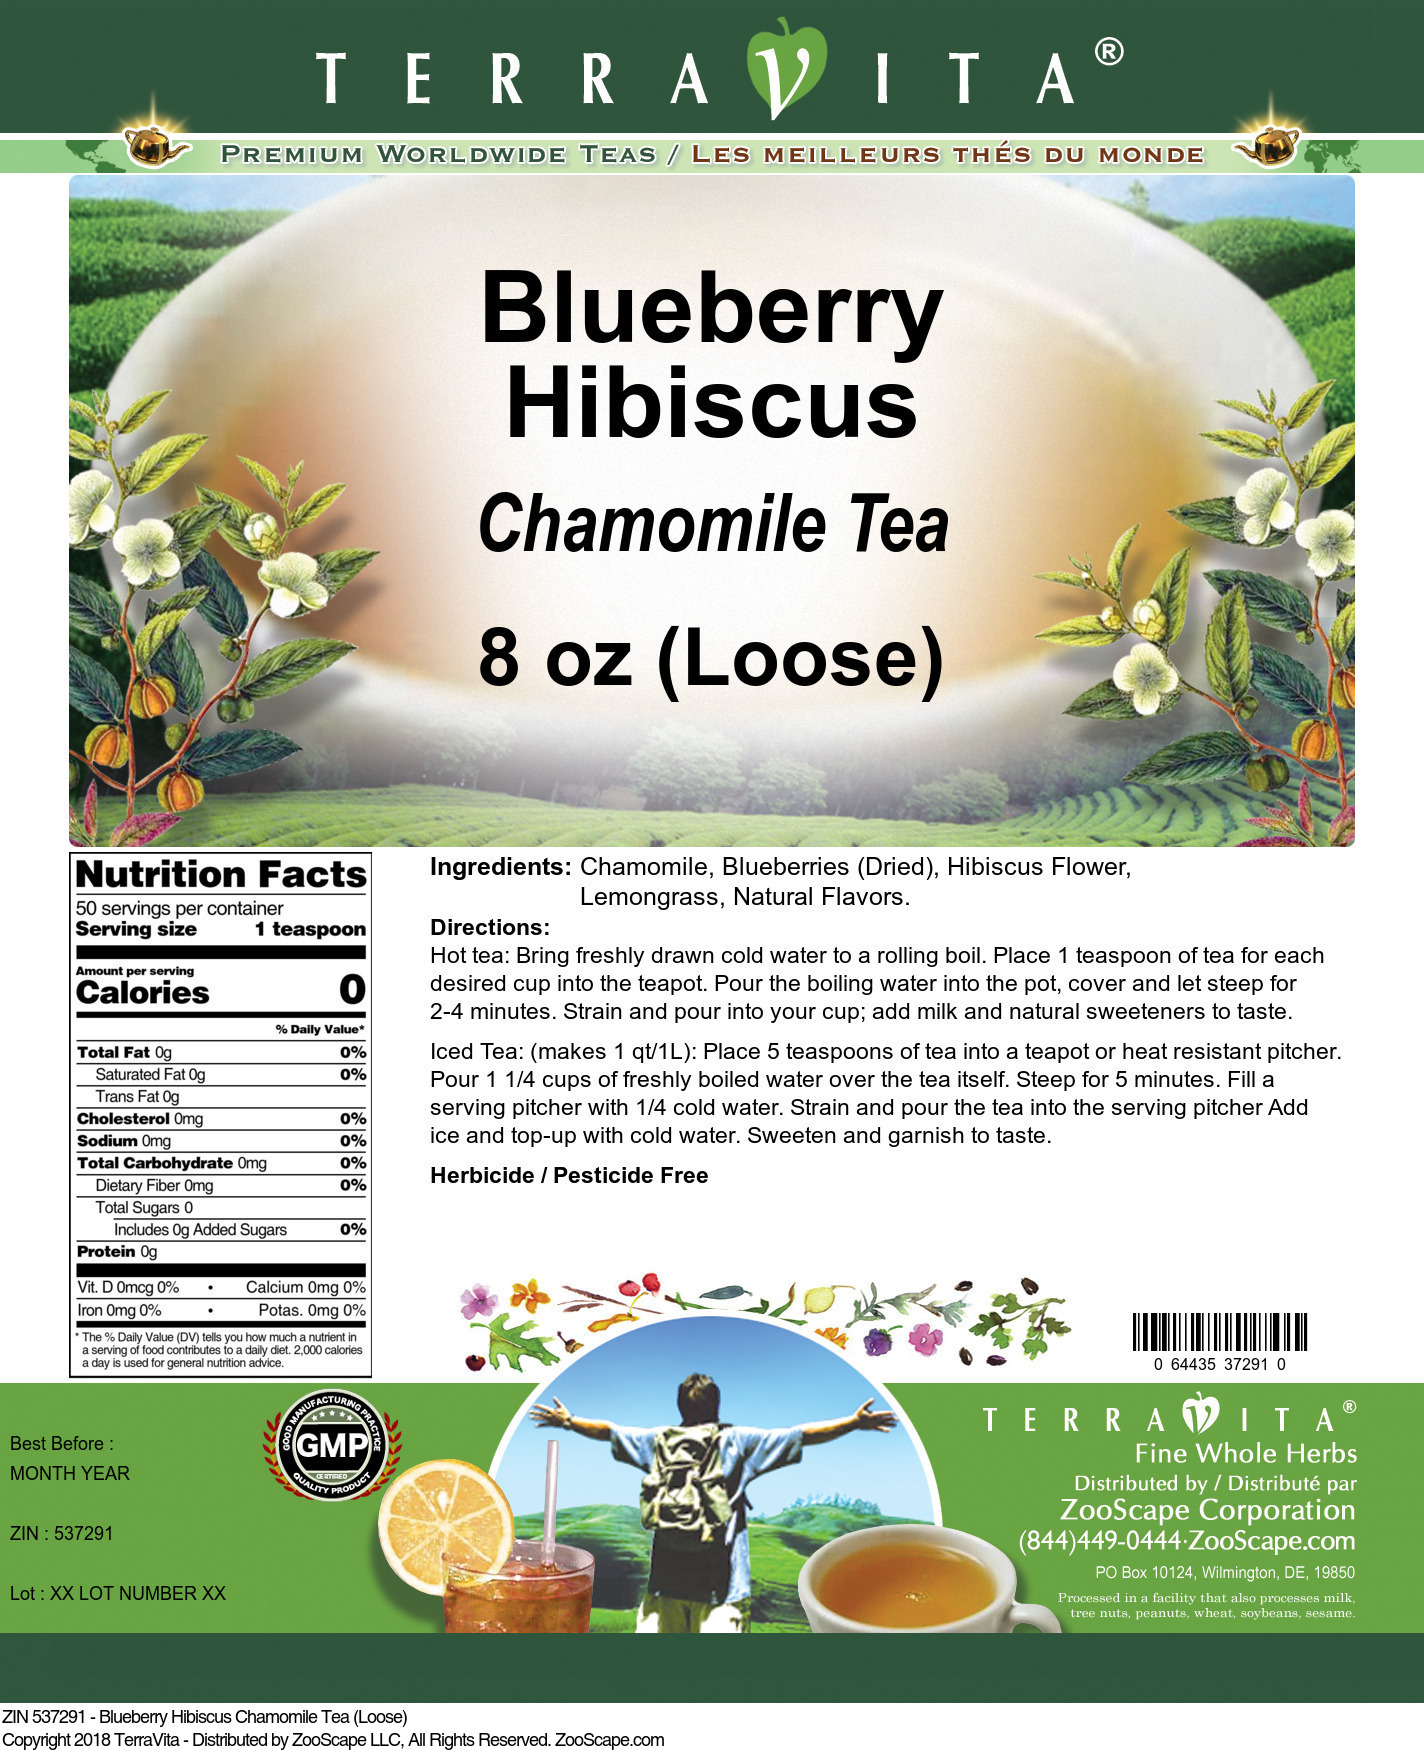 Blueberry Hibiscus Chamomile Tea (Loose) - Label